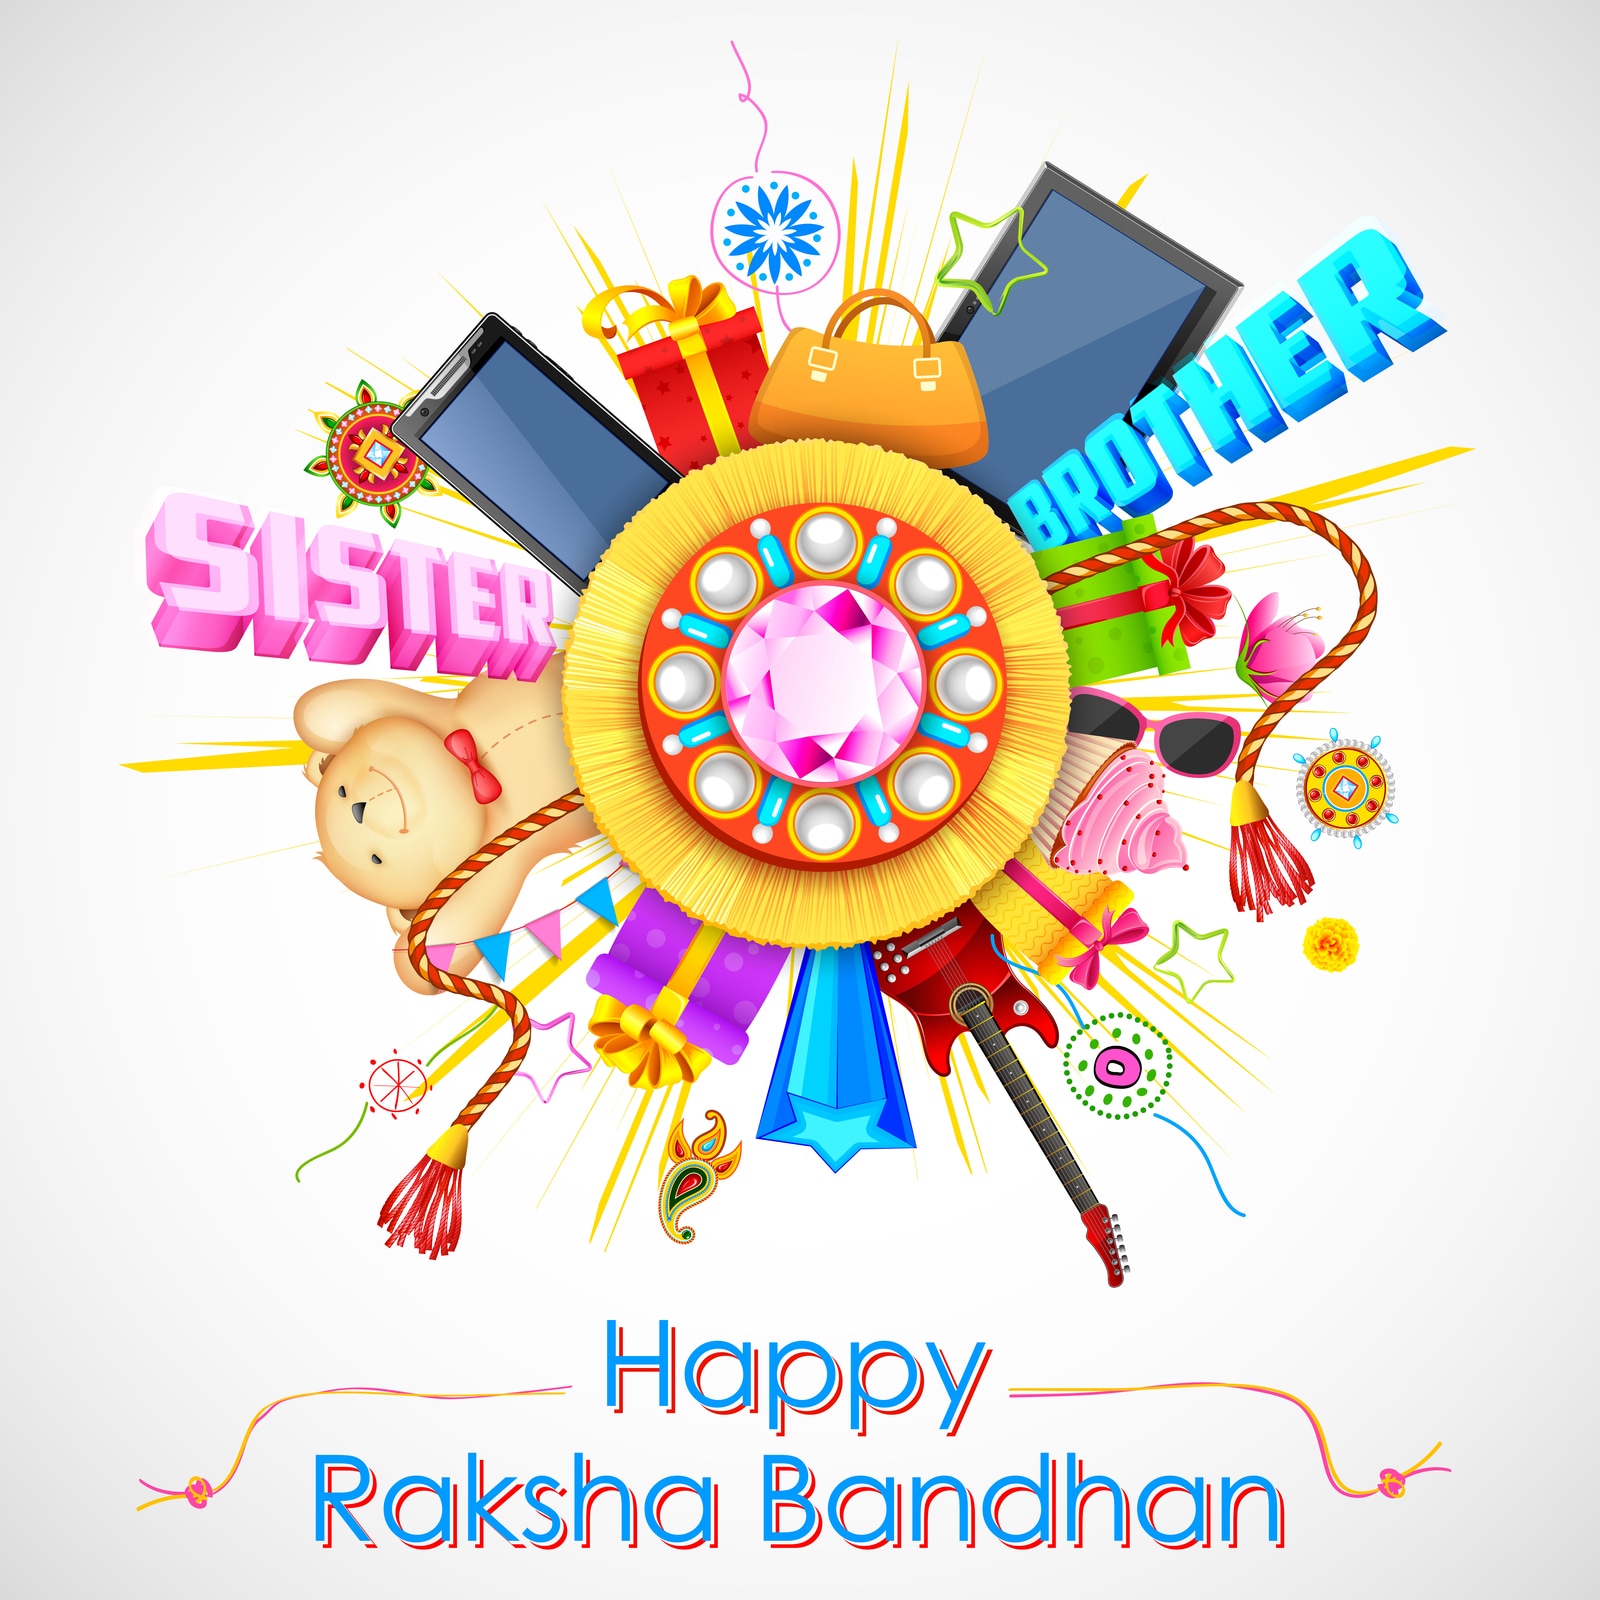 Raksha bandhan gift for sister - Photo Block + Canvas Stand